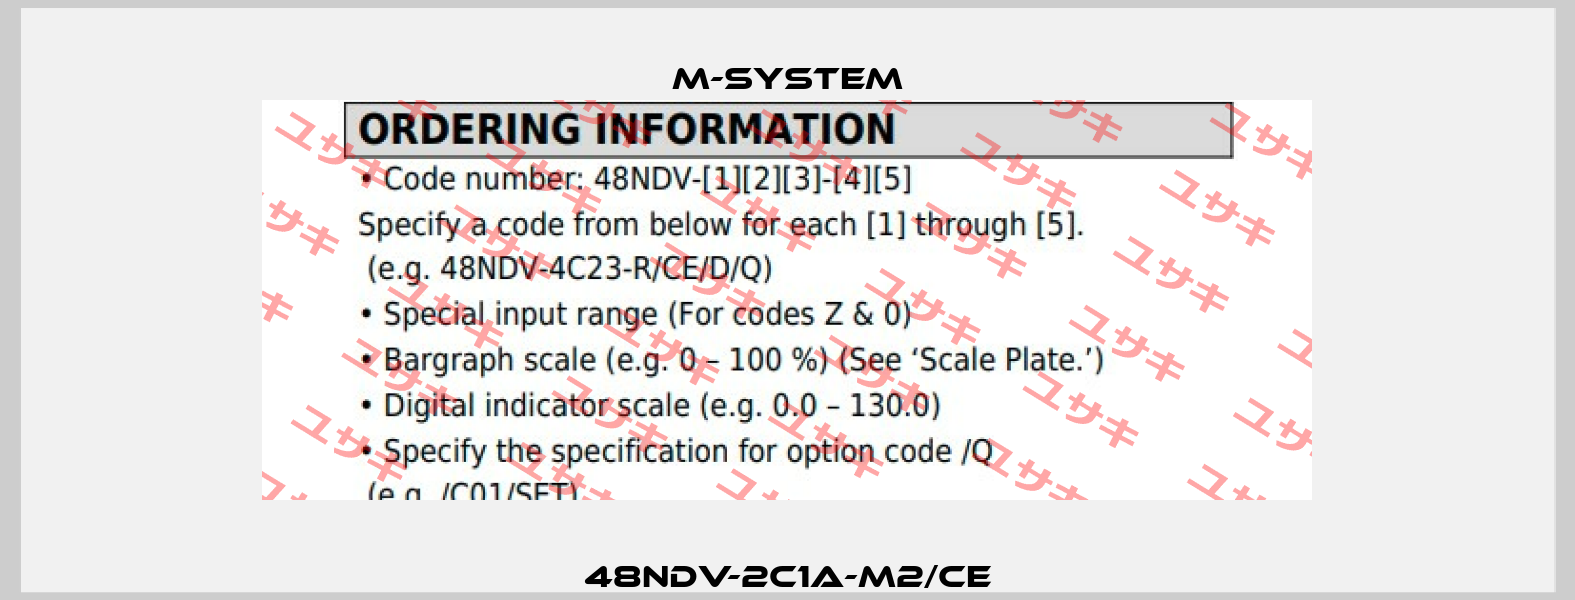 48NDV-2C1A-M2/CE M-SYSTEM